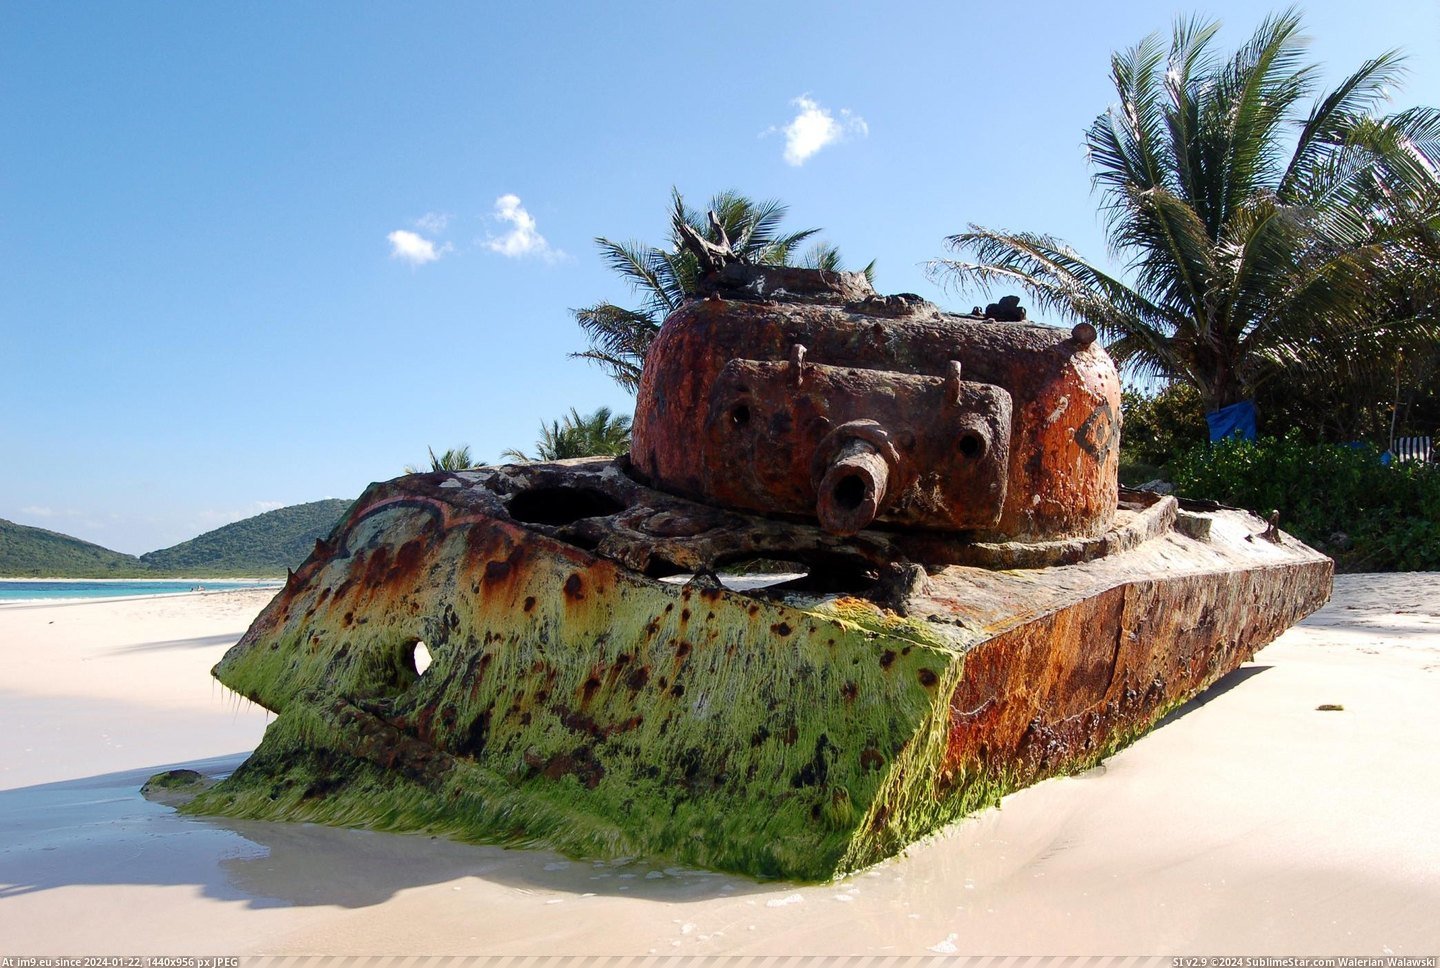 #Beach #Abandoned #Rico #Tank #Puerto [Pics] This abandoned tank on a beach in Puerto Rico Pic. (Image of album My r/PICS favs))